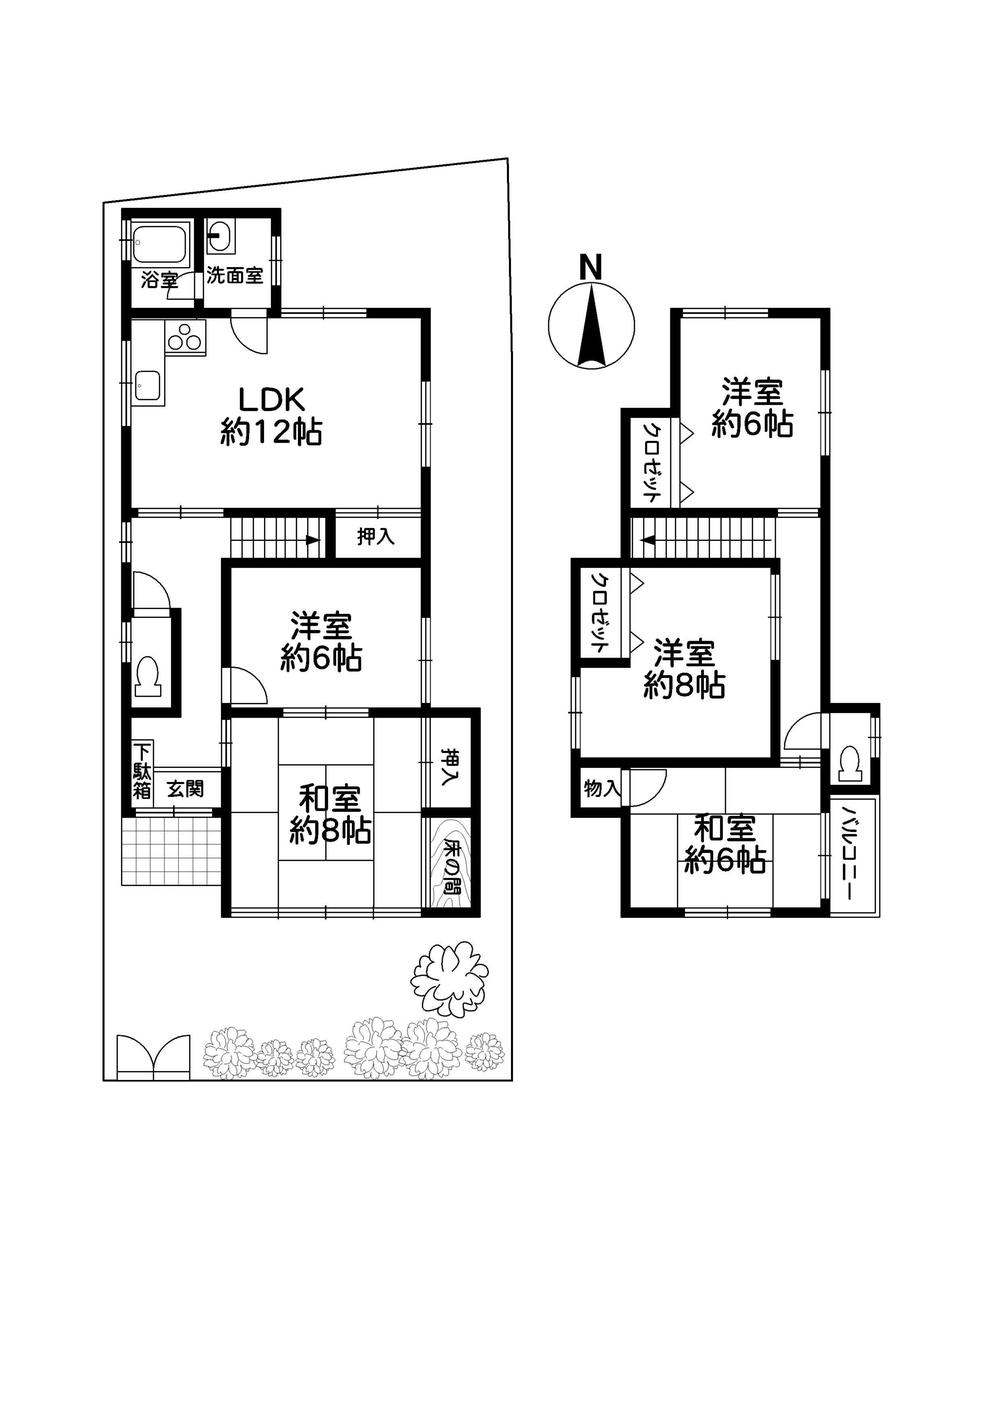 Floor plan. 21,800,000 yen, 5LDK, Land area 146.08 sq m , Building area 109.72 sq m